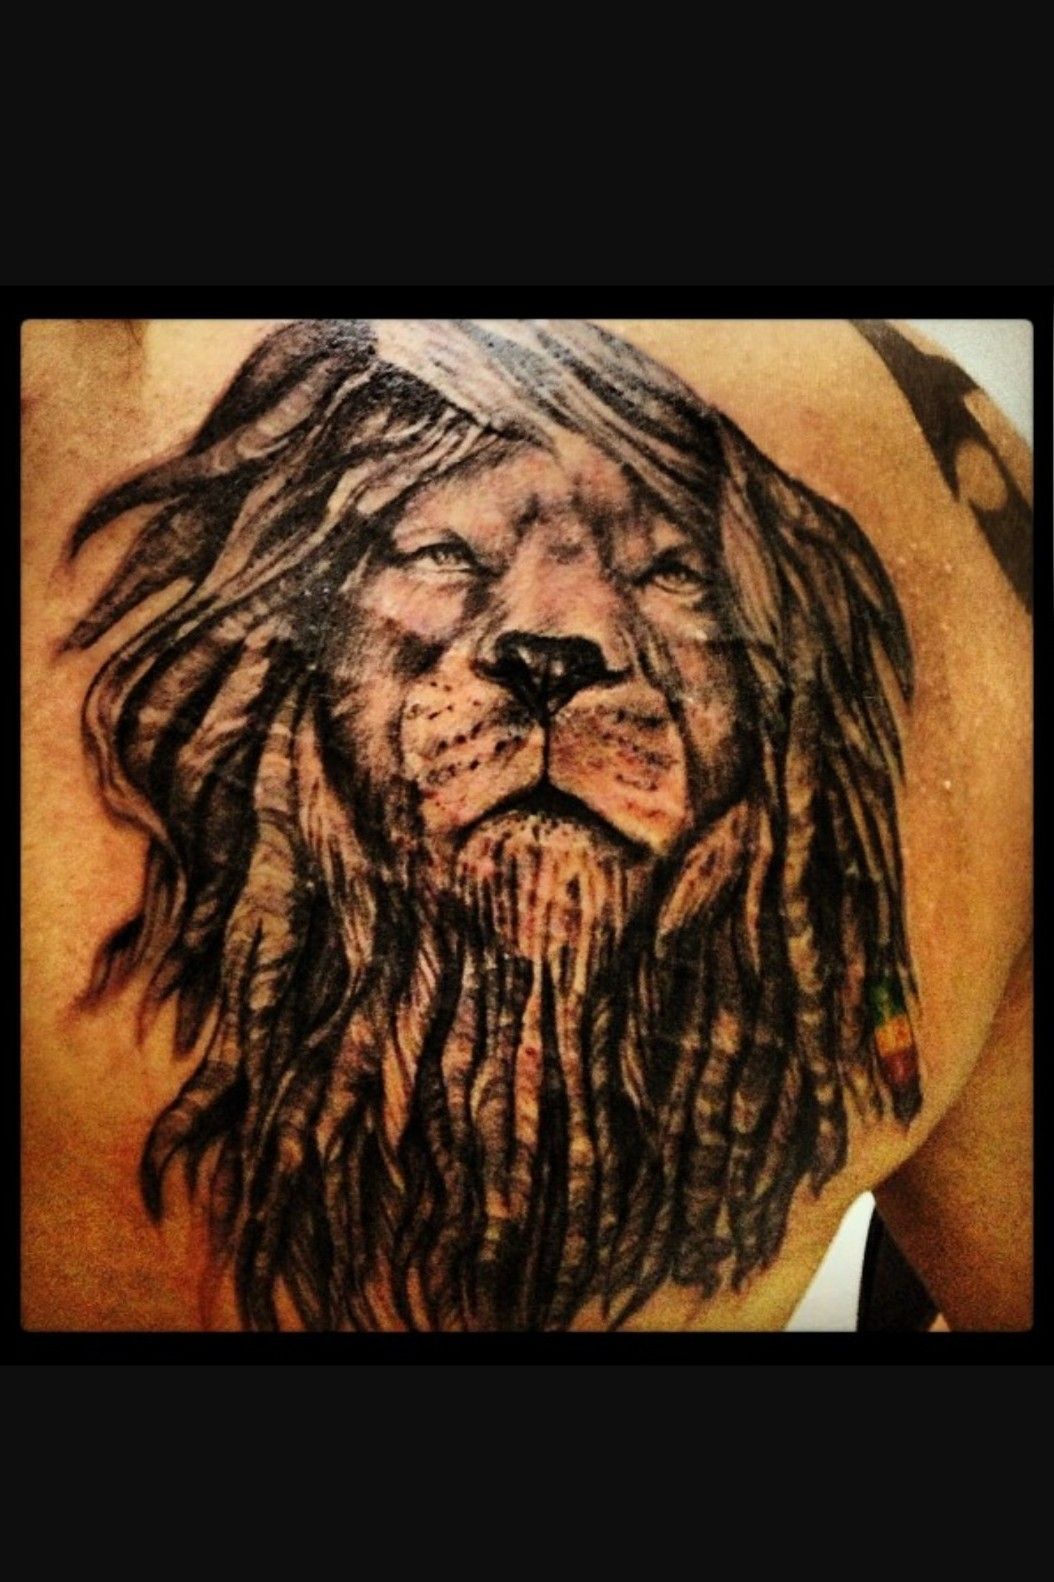 14 Tattoos of lions with dreads ideas  lion tattoo tattoos rasta lion